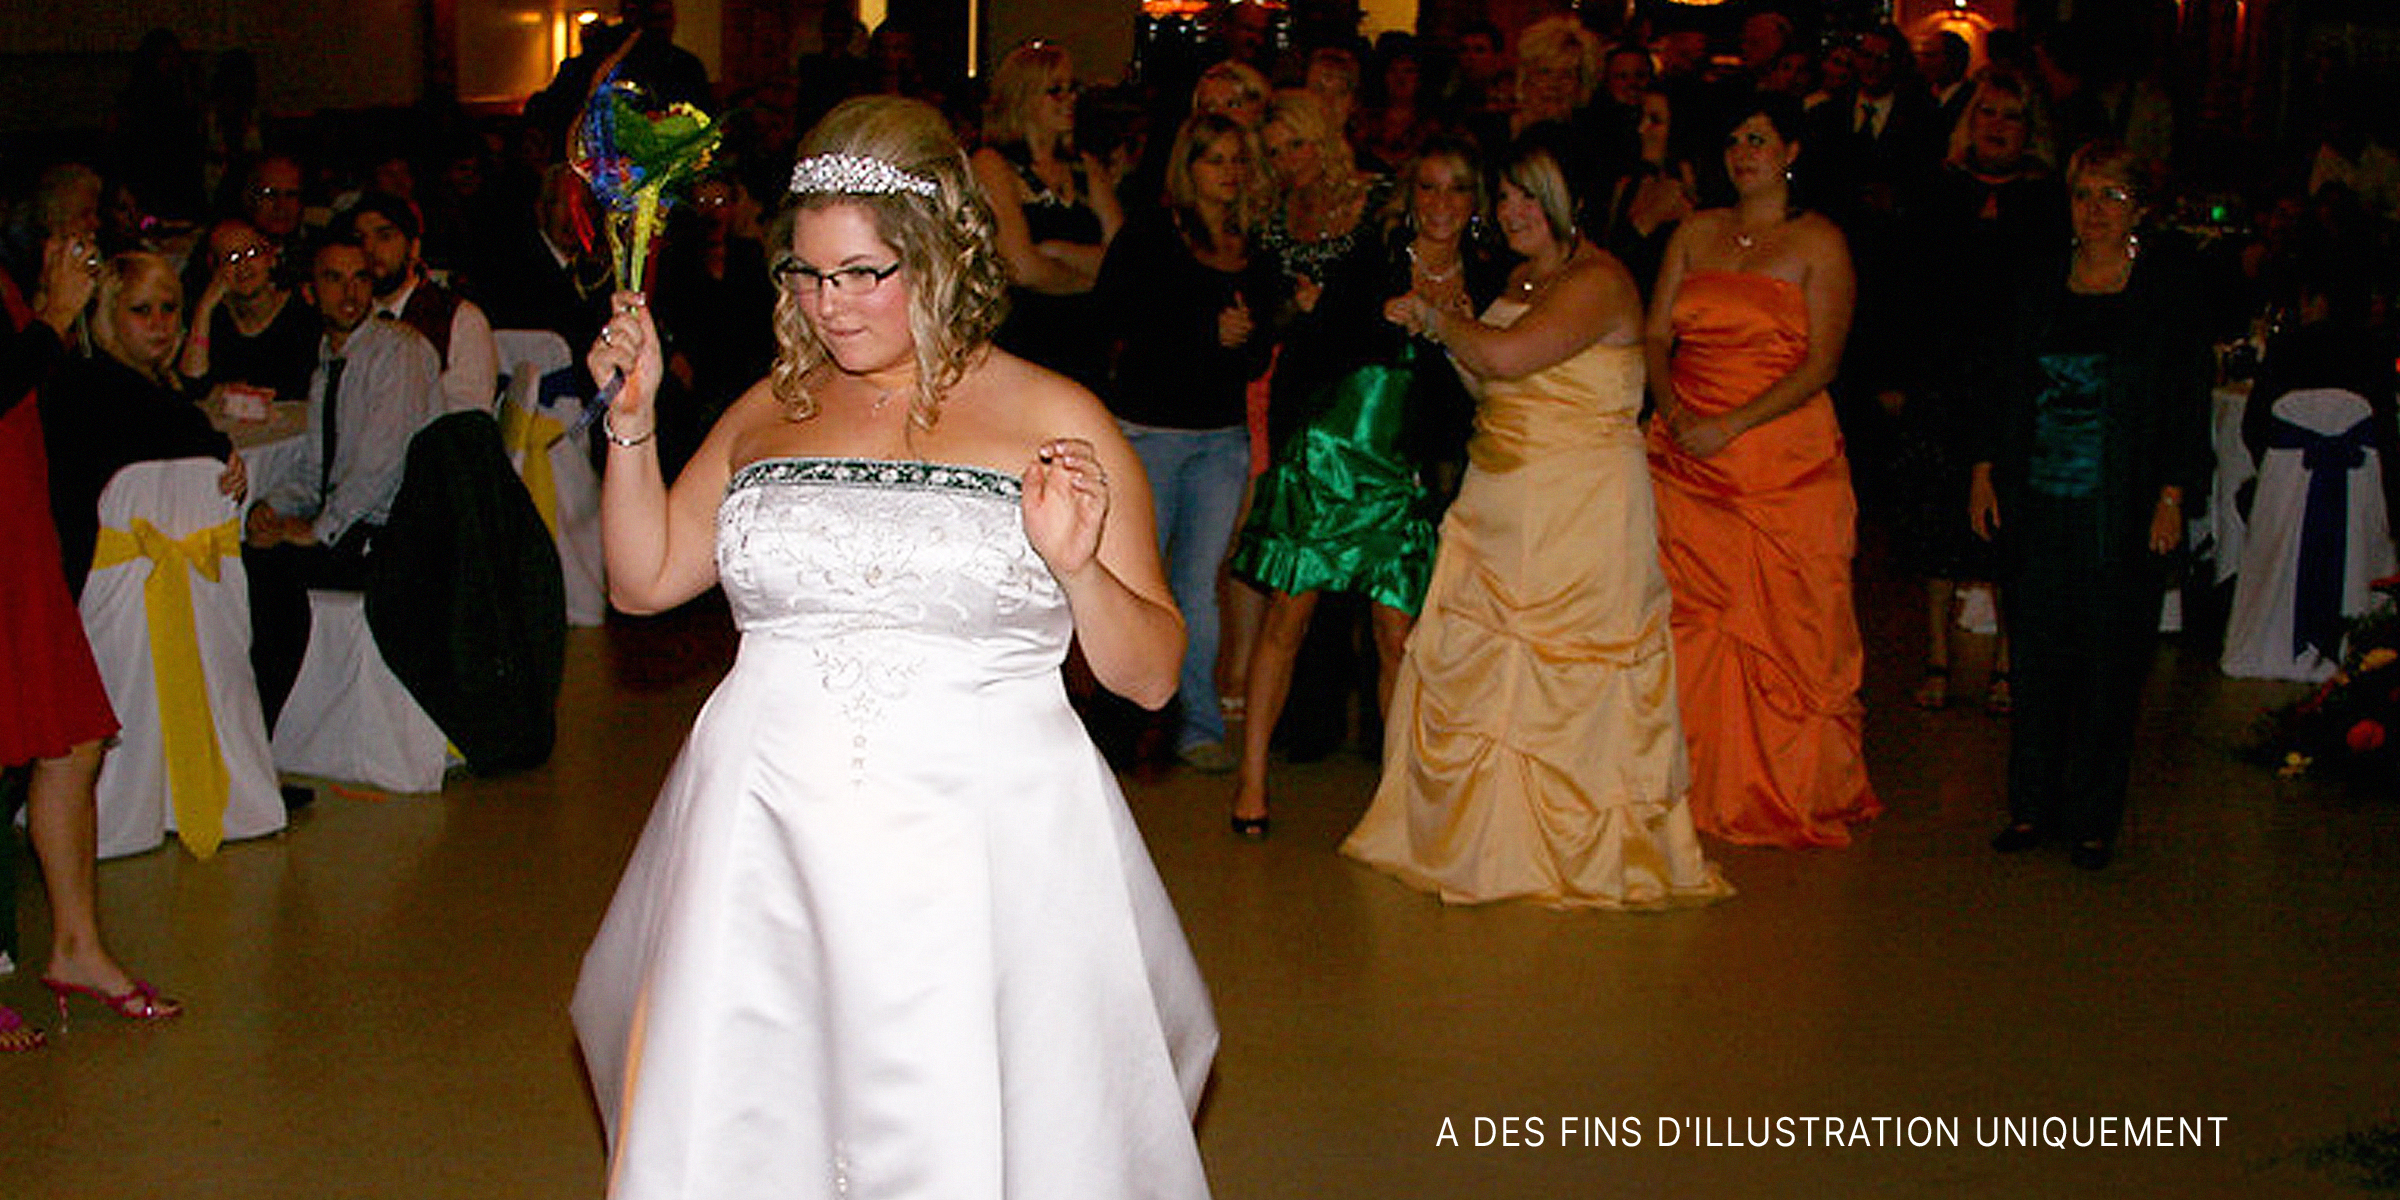 La mariée danse | Source : flickr.com/(CC BY-SA 2.0) by Zeusandhera